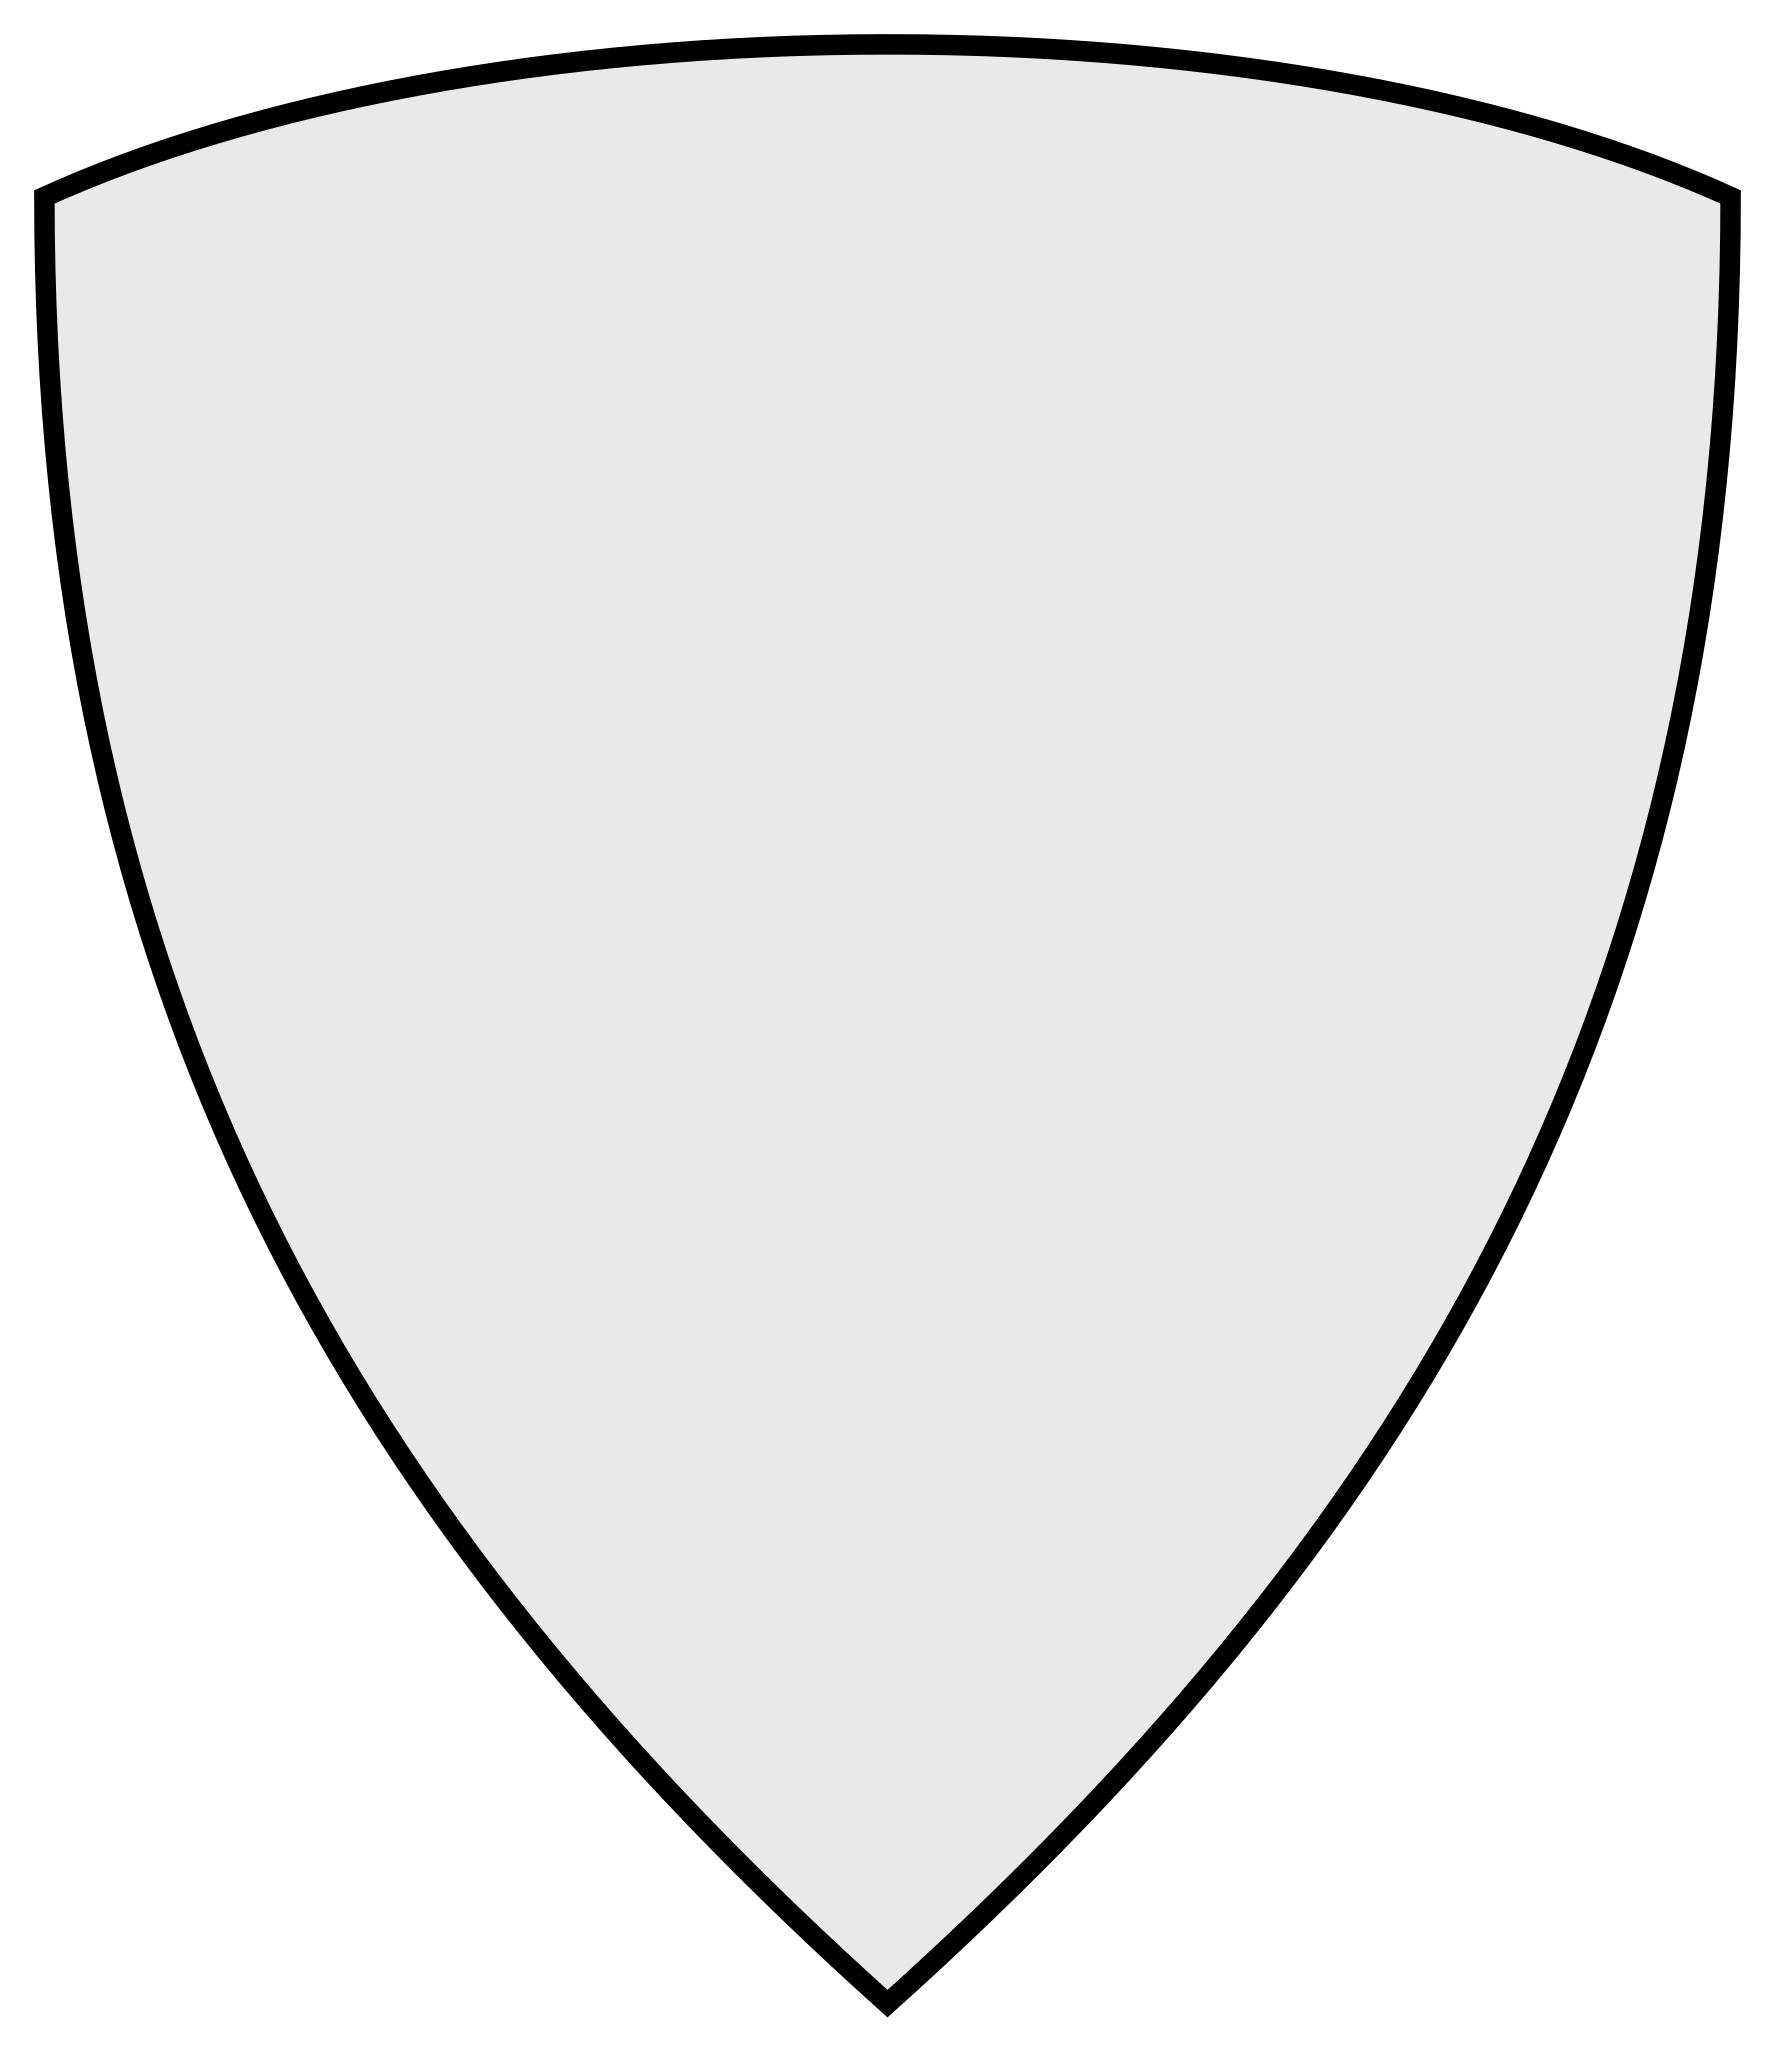 File:Coa Illustration Shield Triangular.svg - Wikimedia Commons